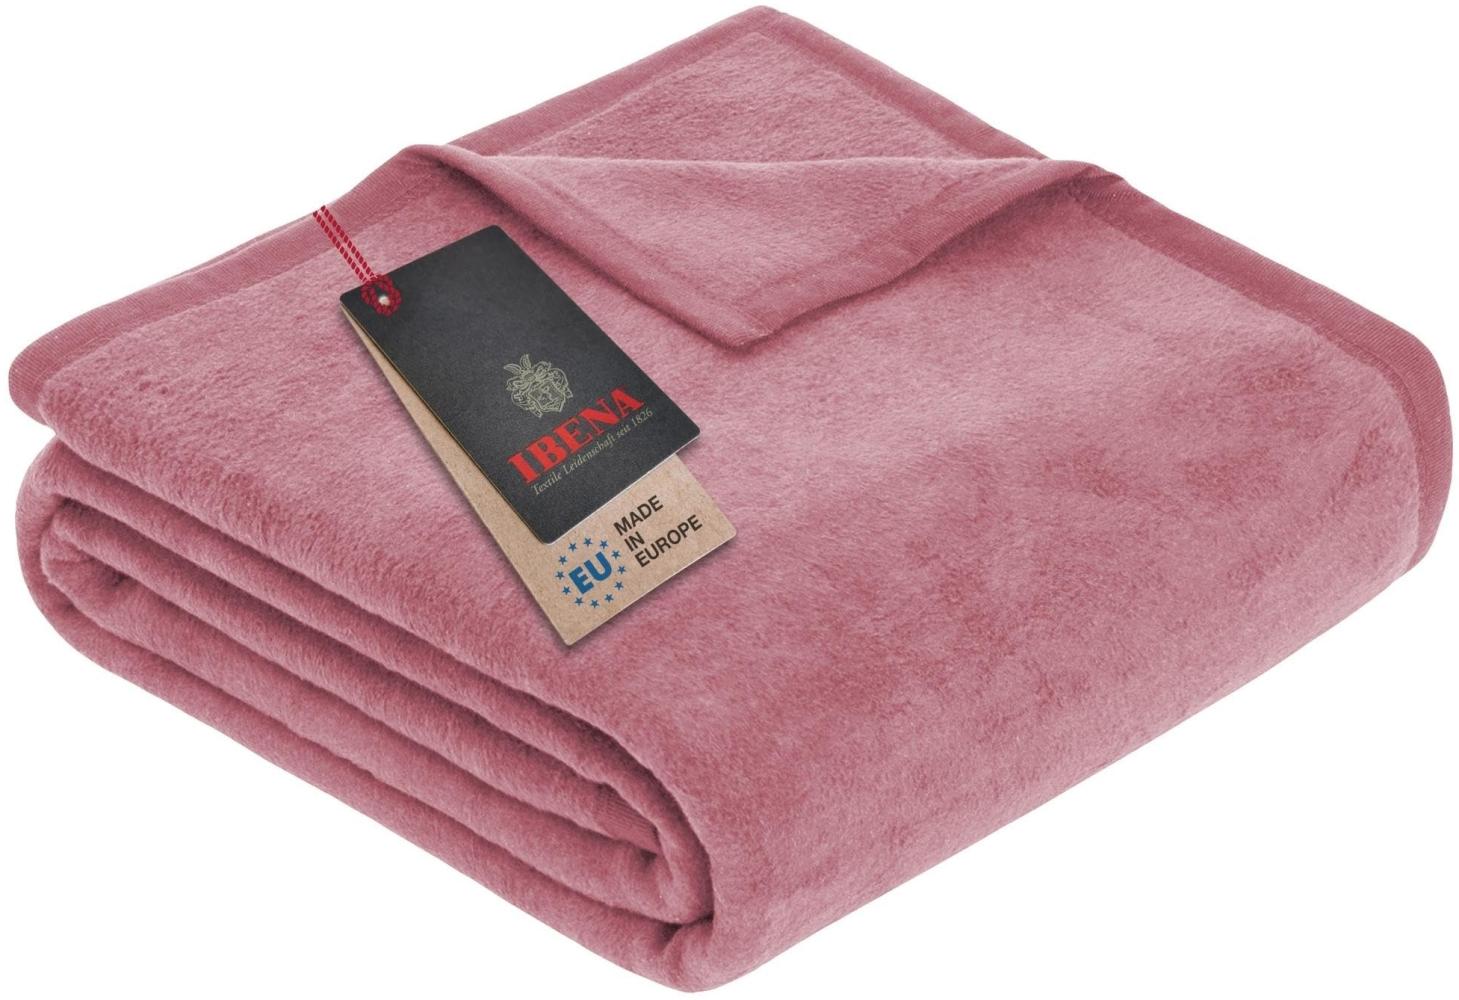 Ibena Porto XXL Decke 220x240 cm – Baumwollmischung weich, warm & waschbar, Tagesdecke rosa einfarbig Bild 1